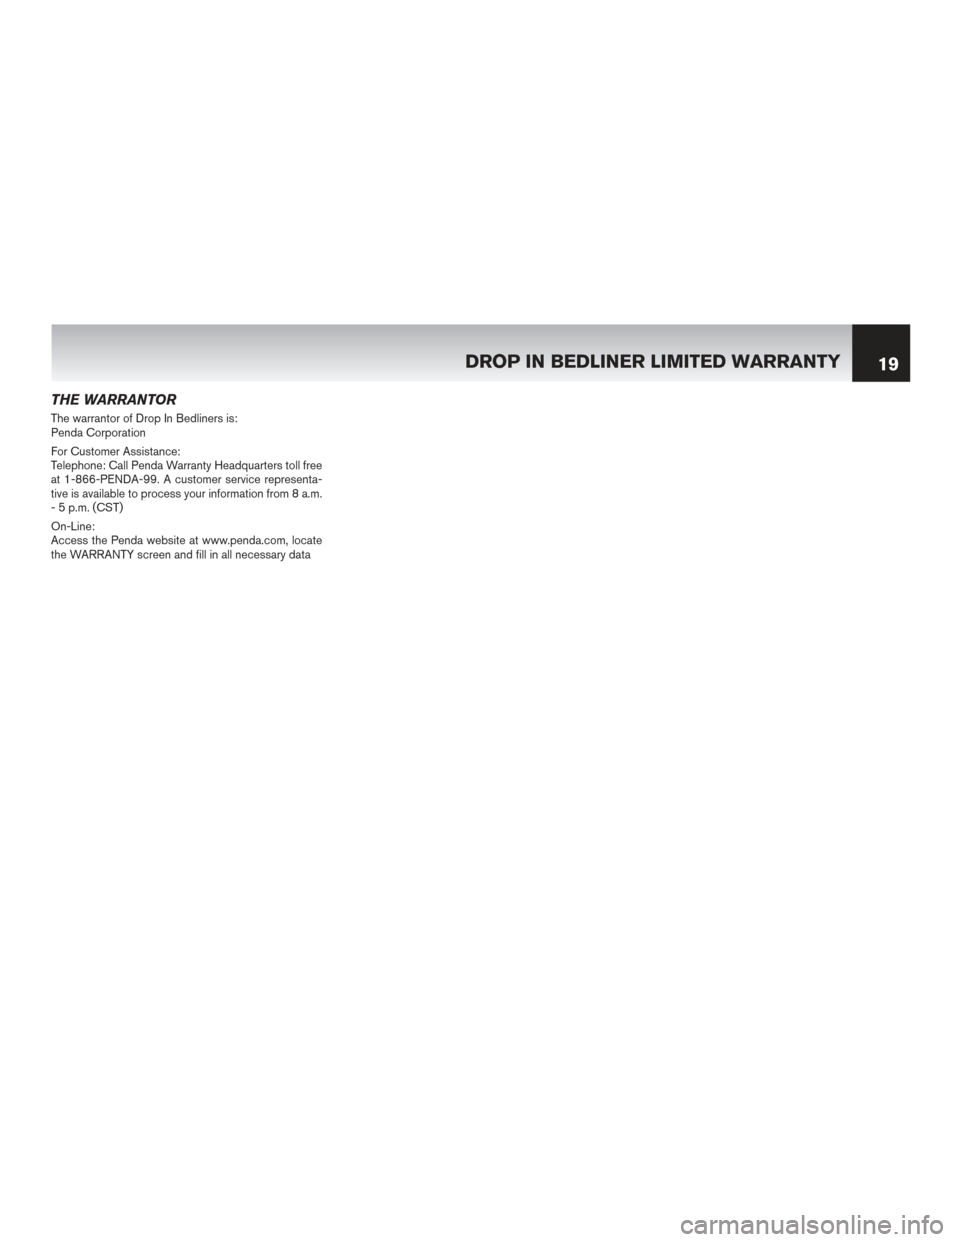 NISSAN JUKE 2016 F15 / 1.G Warranty Booklet THE WARRANTOR
The warrantor of Drop In Bedliners is:
Penda Corporation
For Customer Assistance:
Telephone: Call Penda Warranty Headquarters toll free
at 1-866-PENDA-99. A customer service representa-
